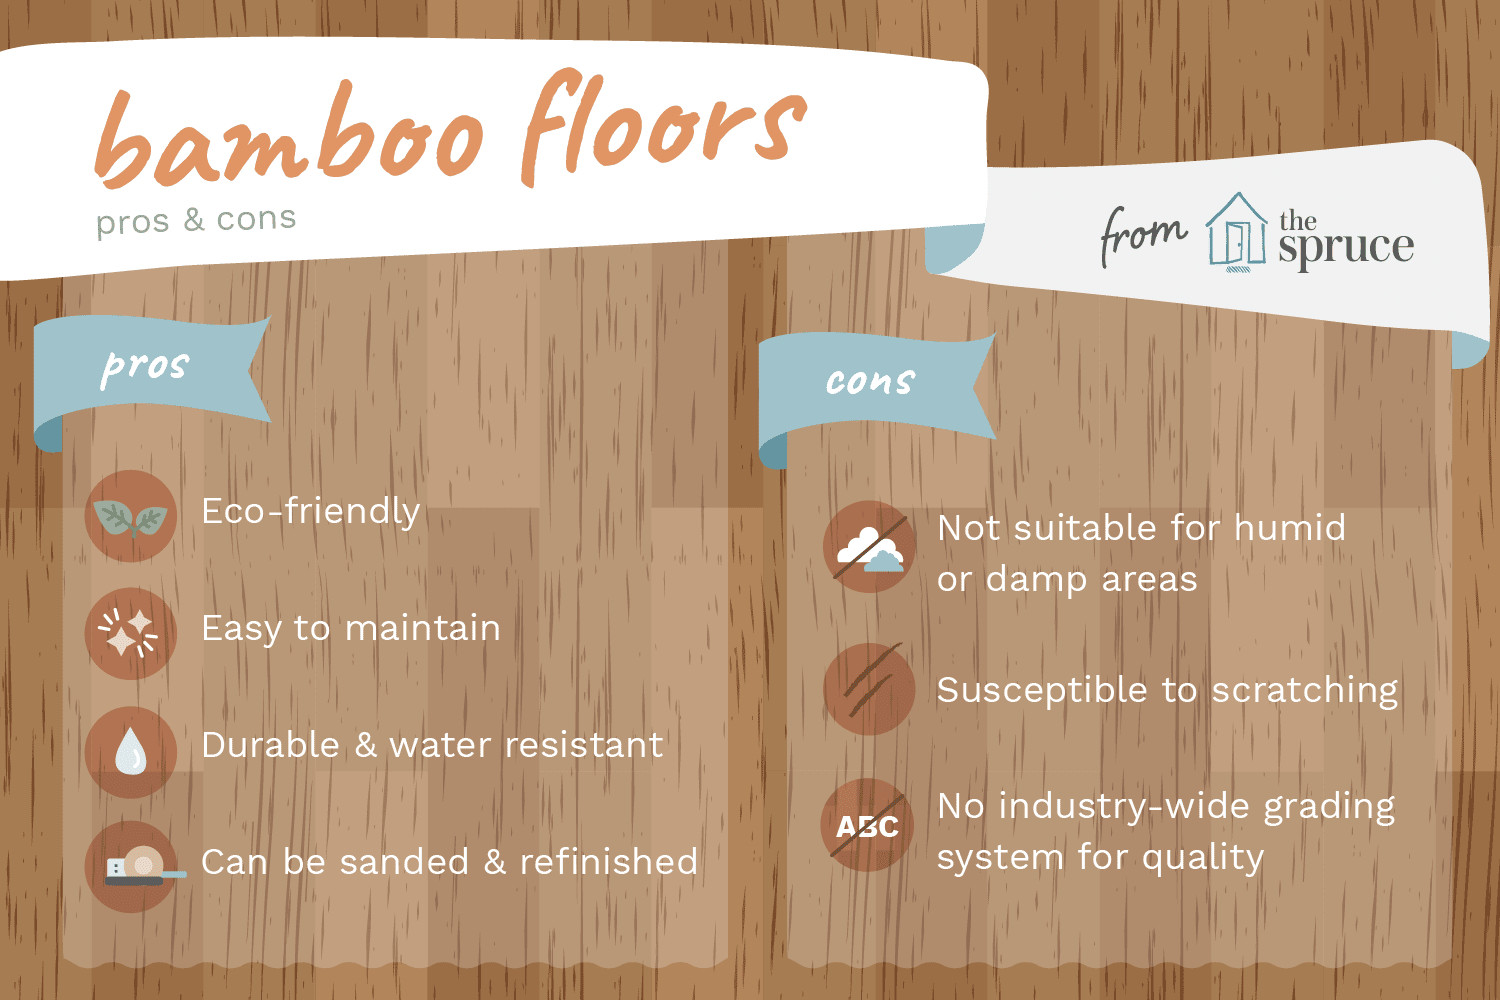 underlayment for bamboo hardwood flooring of the advantages and disadvantages of bamboo flooring for benefits and drawbacks of bamboo floors 1314694 v3 5b102fccff1b780036c0a4fa